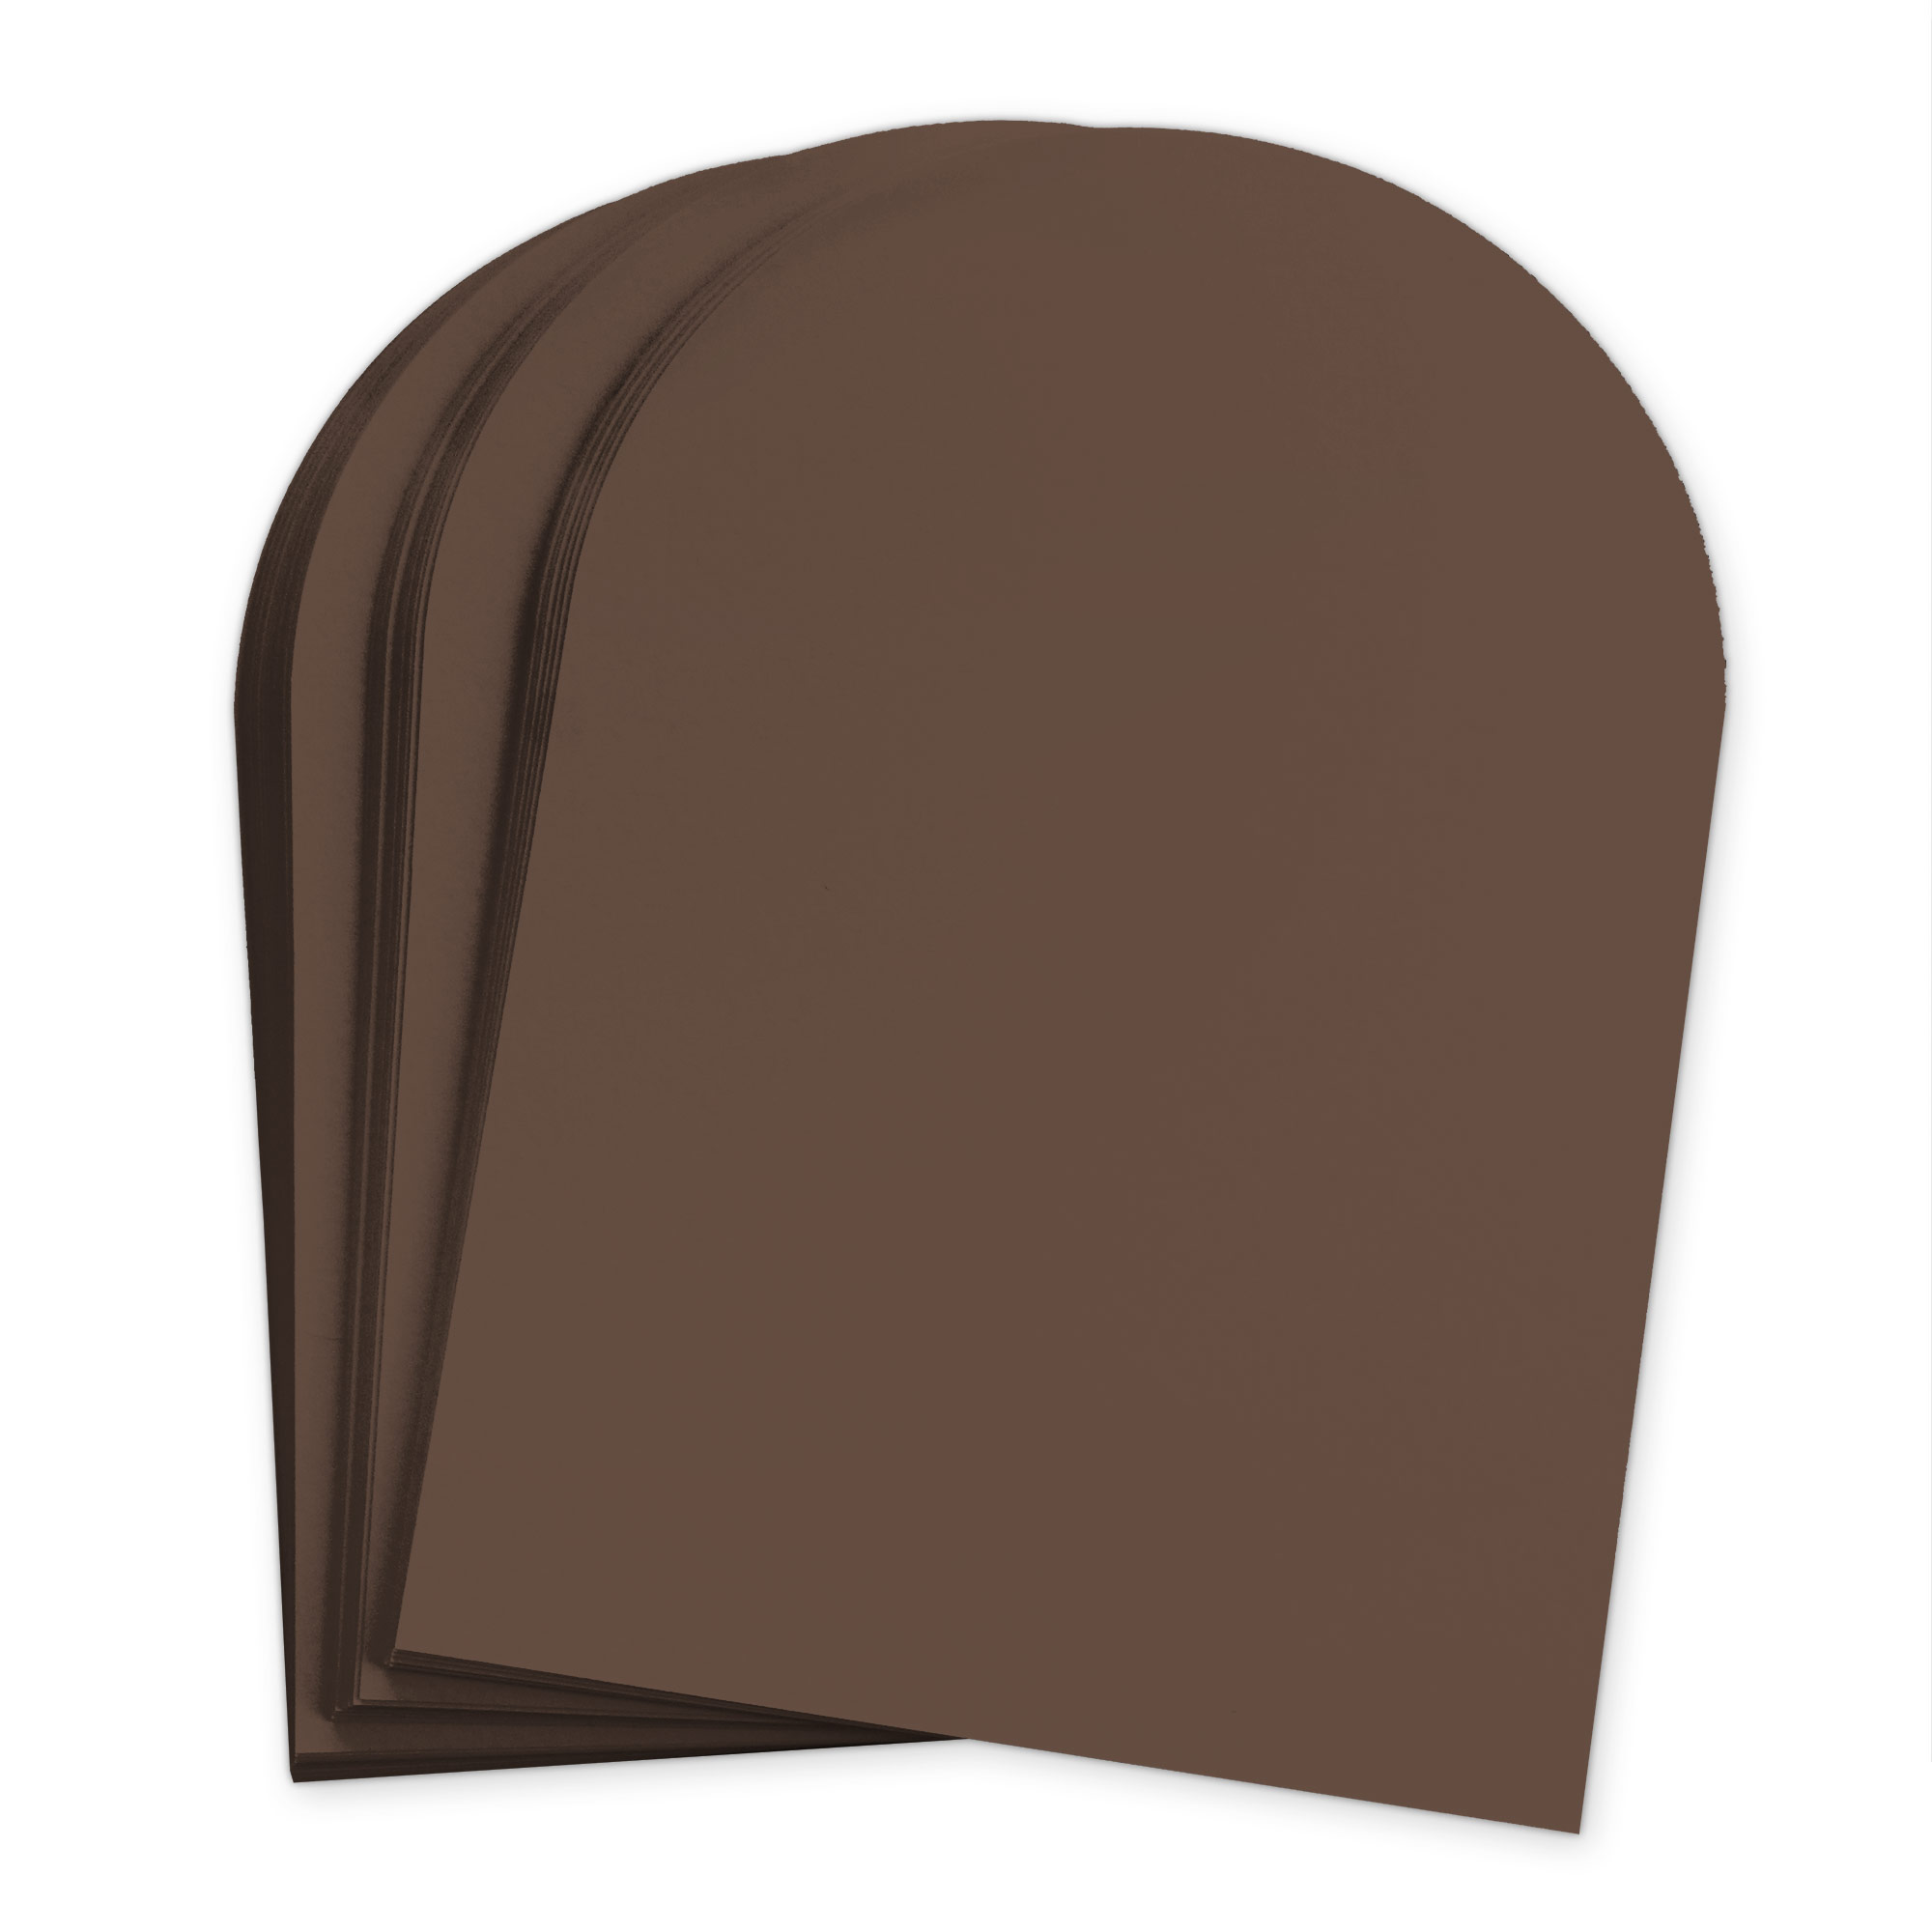 Chocolate Brown Arch Shaped Card - A2 Gmund Colors Matt 4 1/4 x 5 1/2 111C